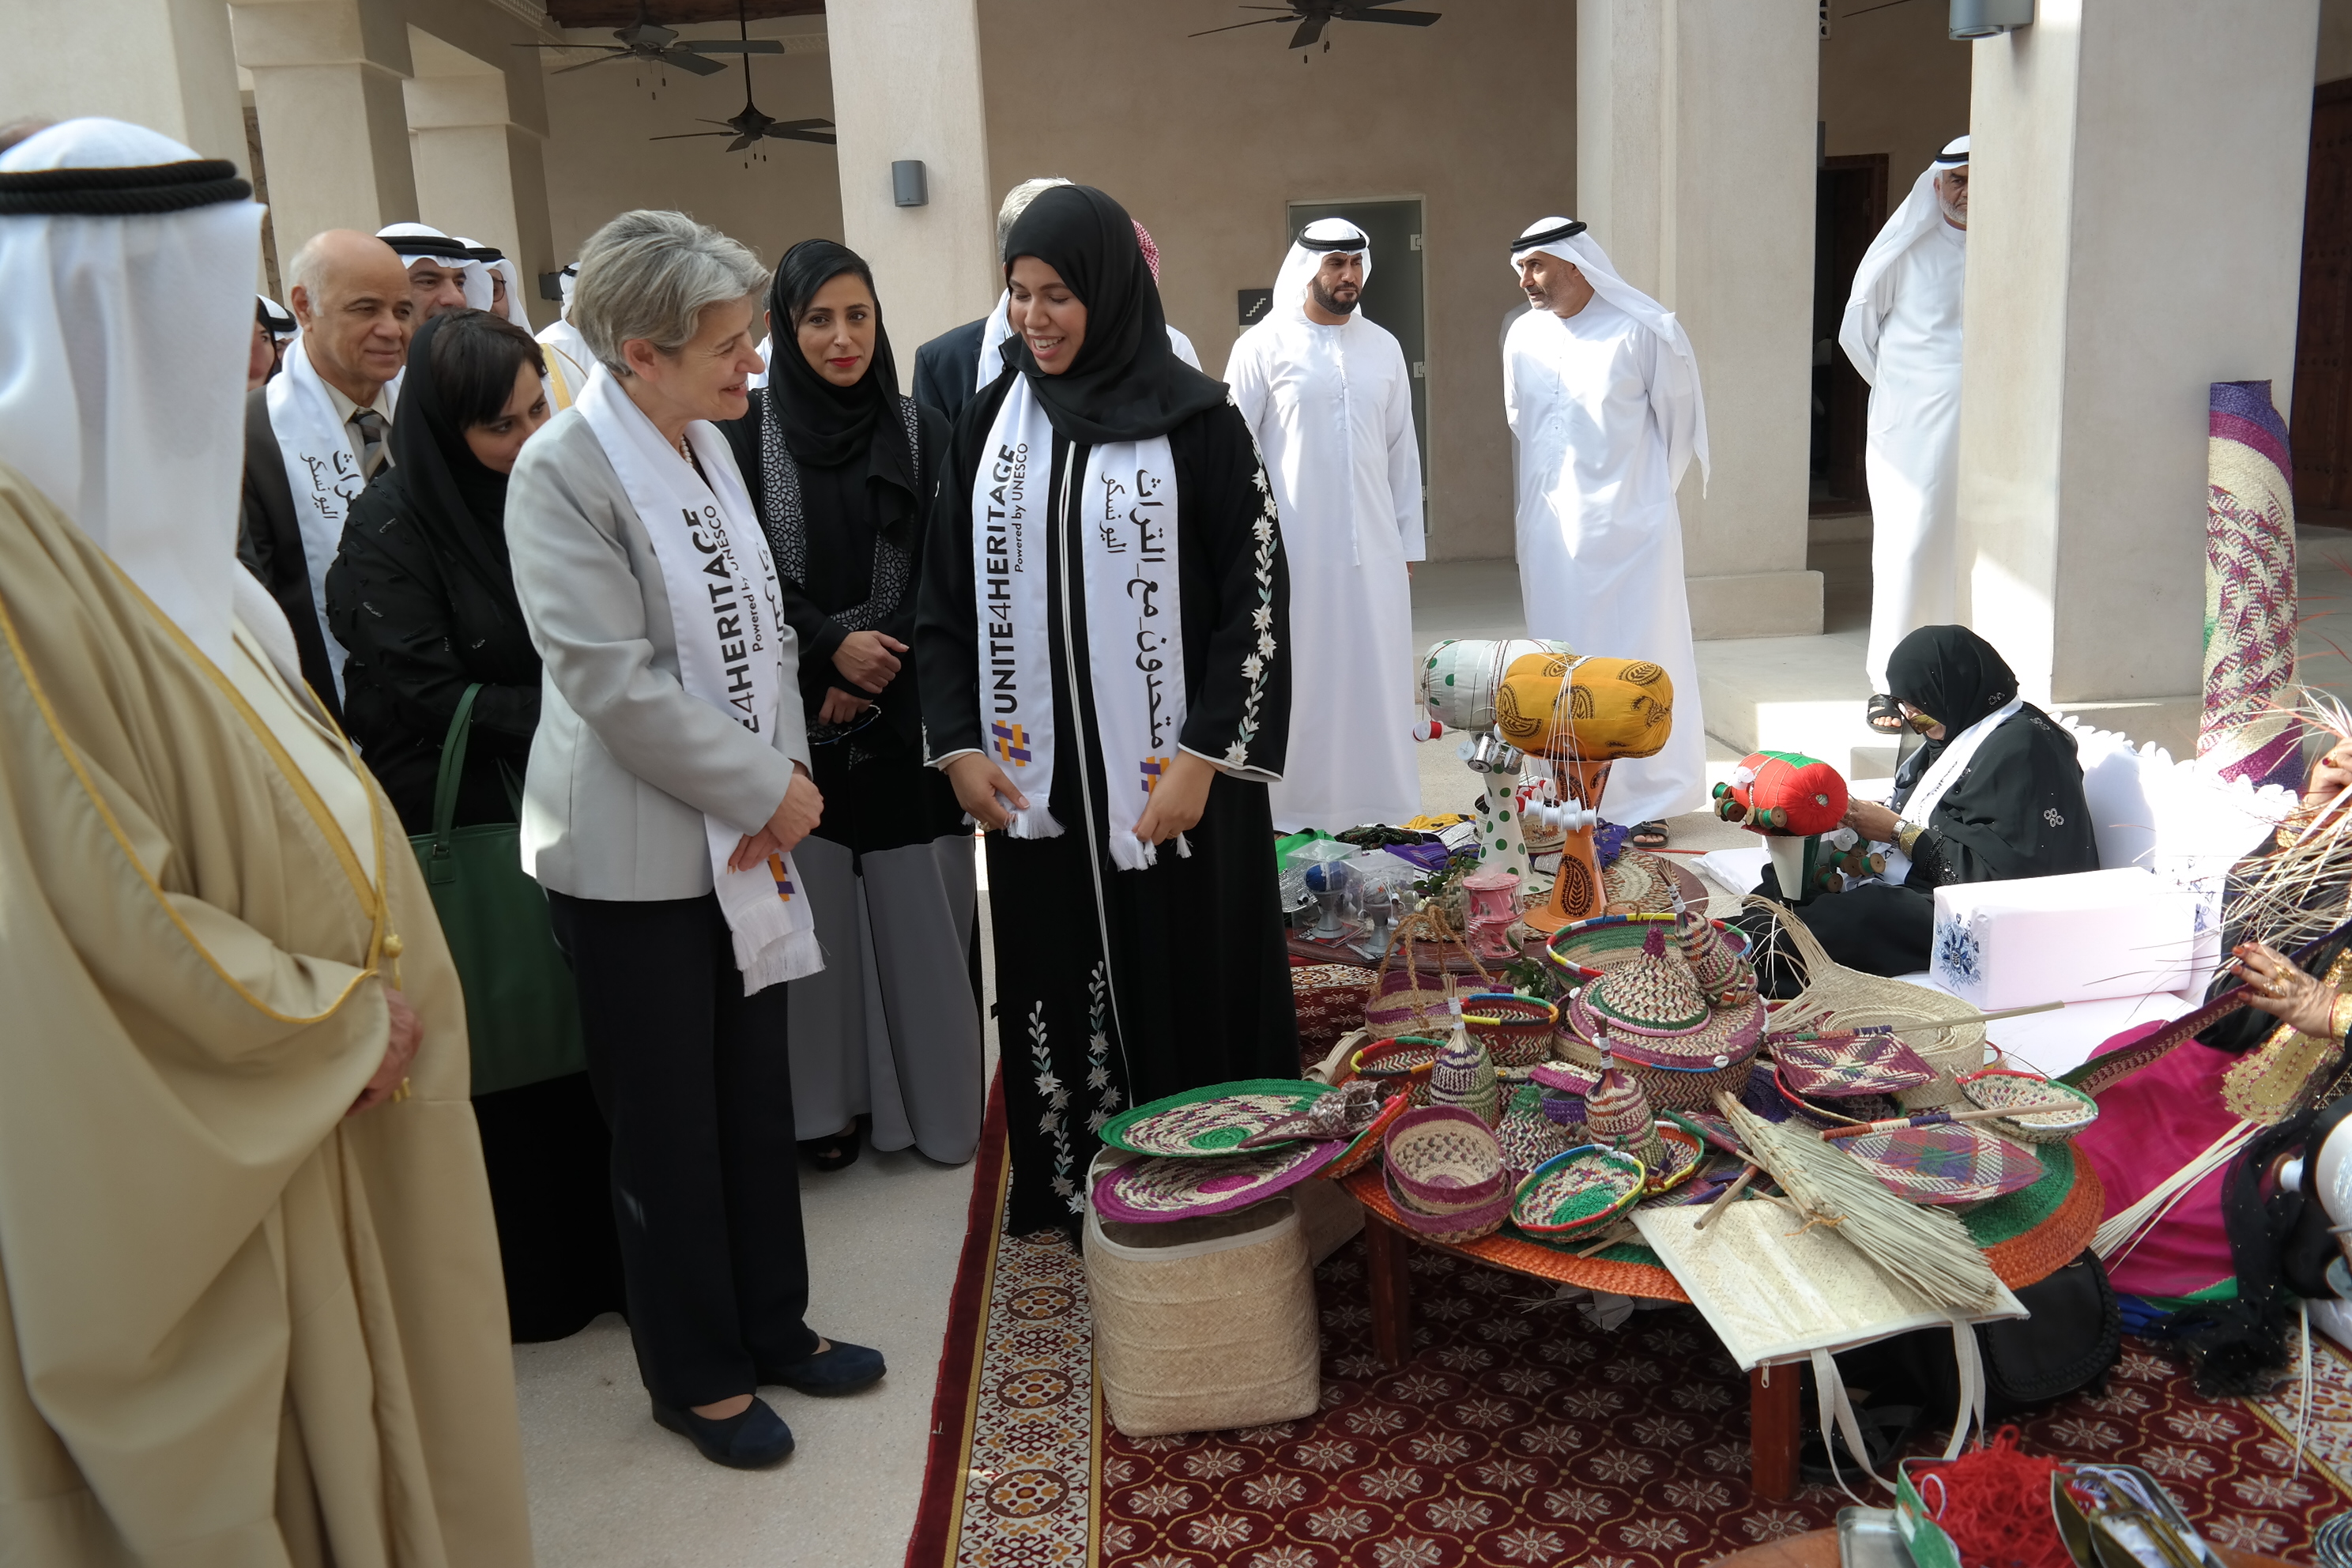 UNESCO launches #Unite4Heritage in Sharjah, UAE - Director-General Irina Bokova and H.E. Sultan bin Muhammad Al-Qasimi, Ruler of Sharjah